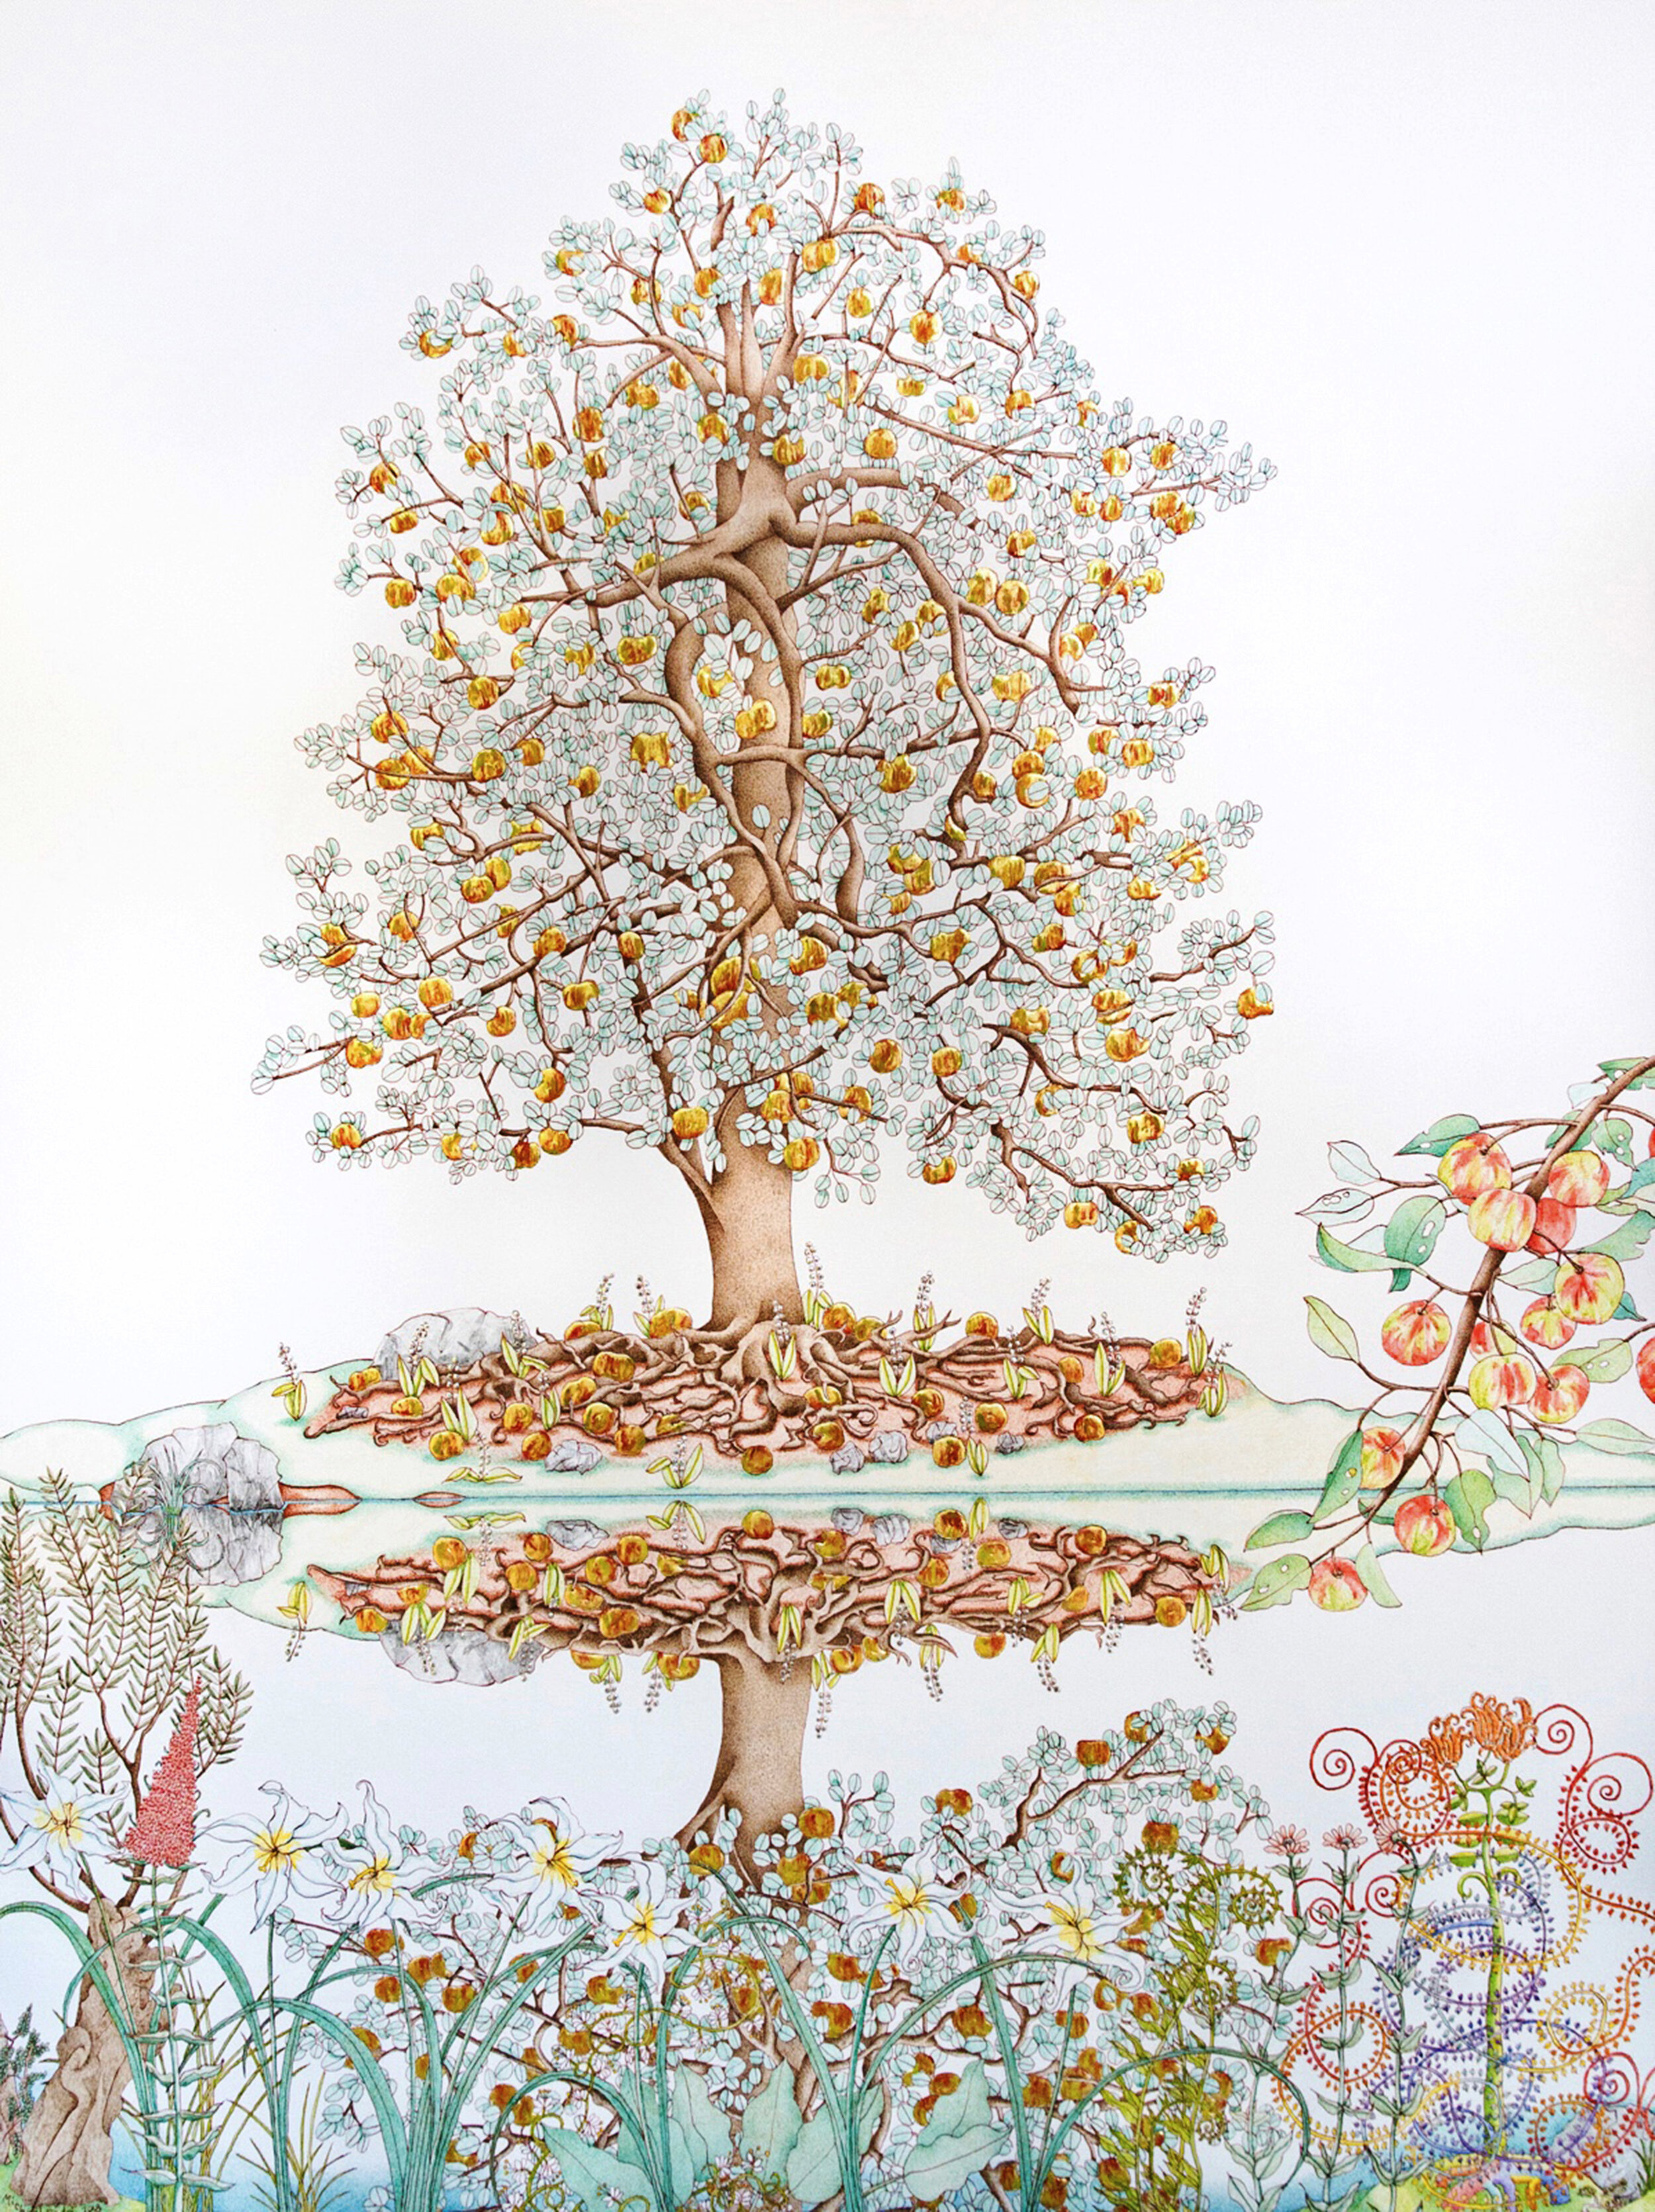  Michael Eade.  Vanitas, Tree of Life Reflected 生命之树倒影， Egg tempera, raised 22k gold leaf, raised copper and aluminum leaf, oil on canvas, 48 x 36 in. (122 x 91.4 cm), 2018. 